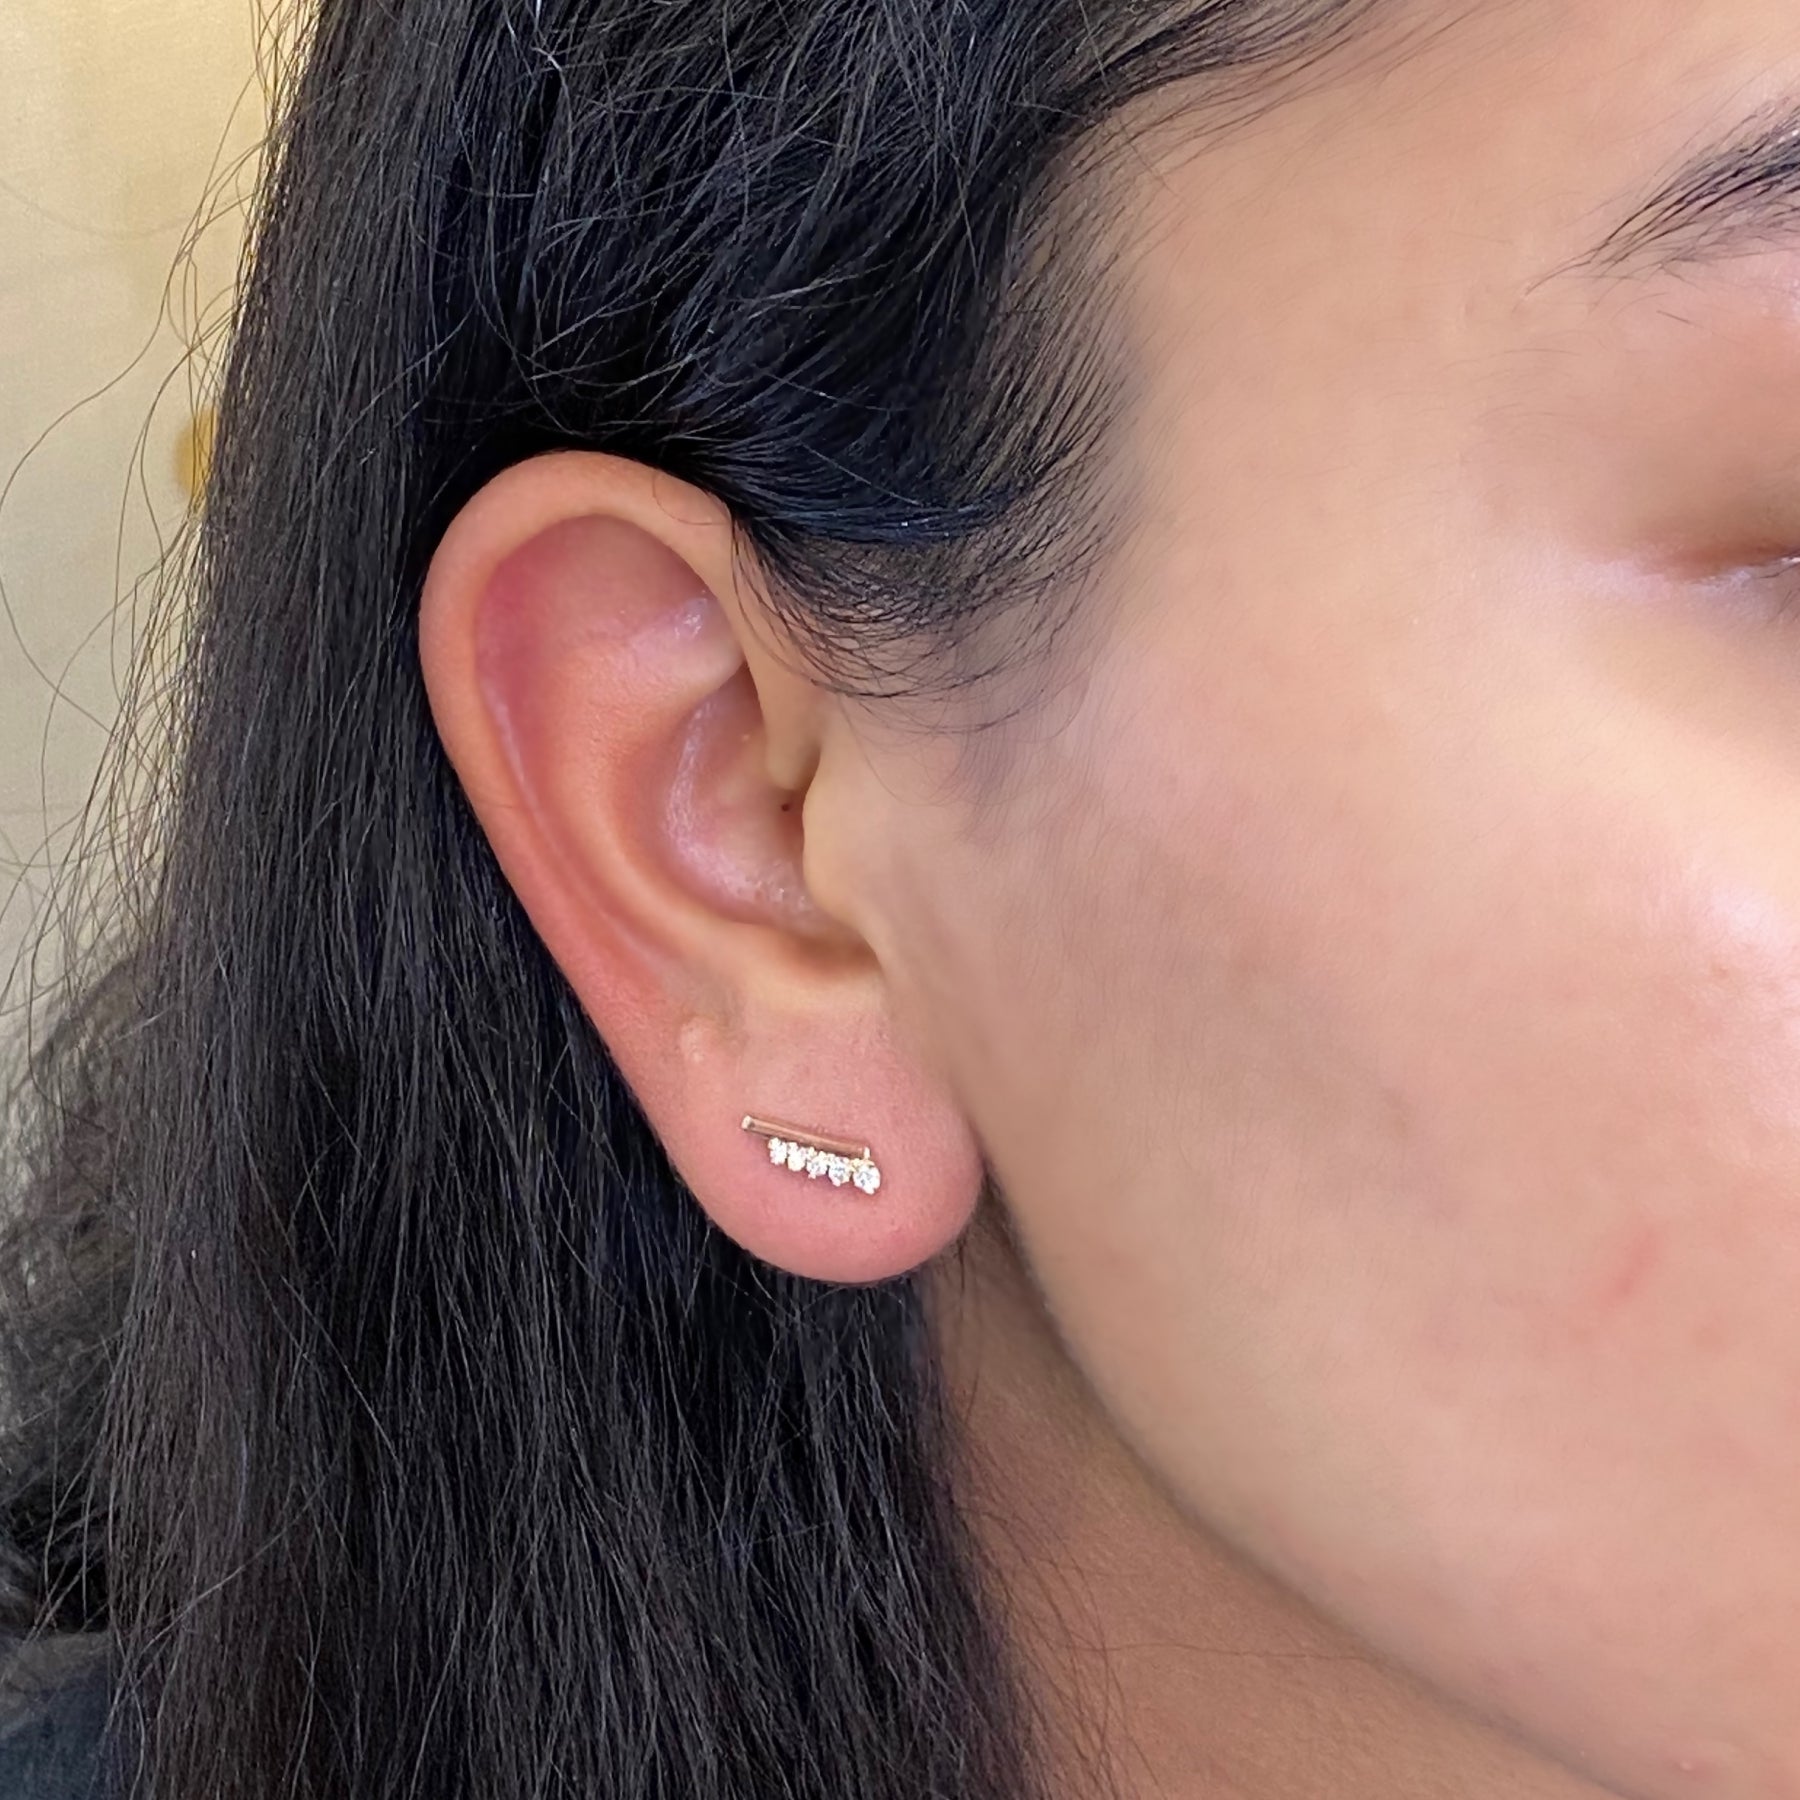 Tiara diamond earrings in rose gold studs la more design jewelry